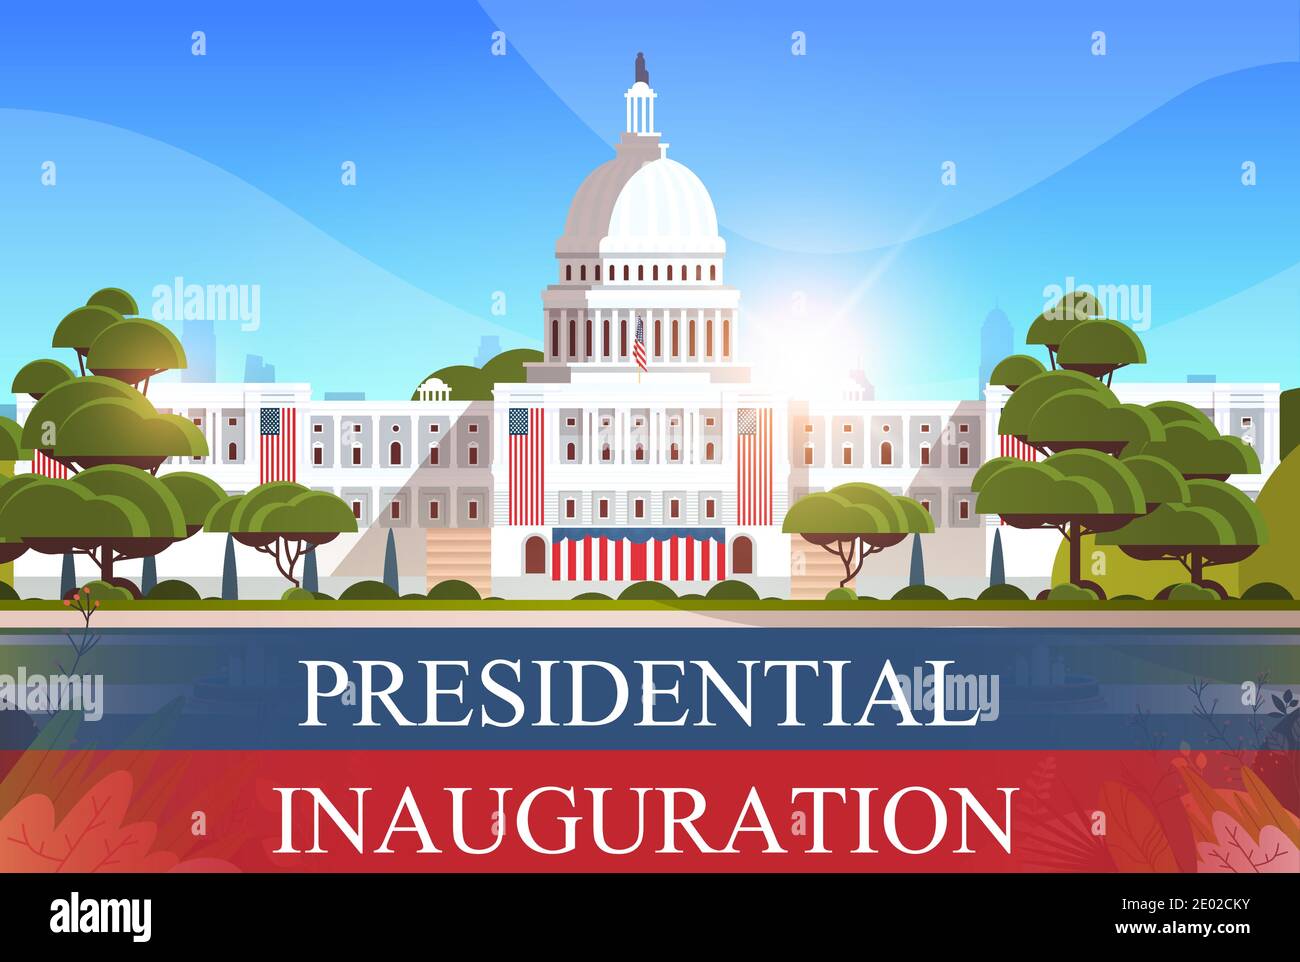 capitol Gebäude washington D.C. USA Präsident Einweihung Tag Feier Konzept Grußkarte horizontale Banner Vektor Illustration Stock Vektor